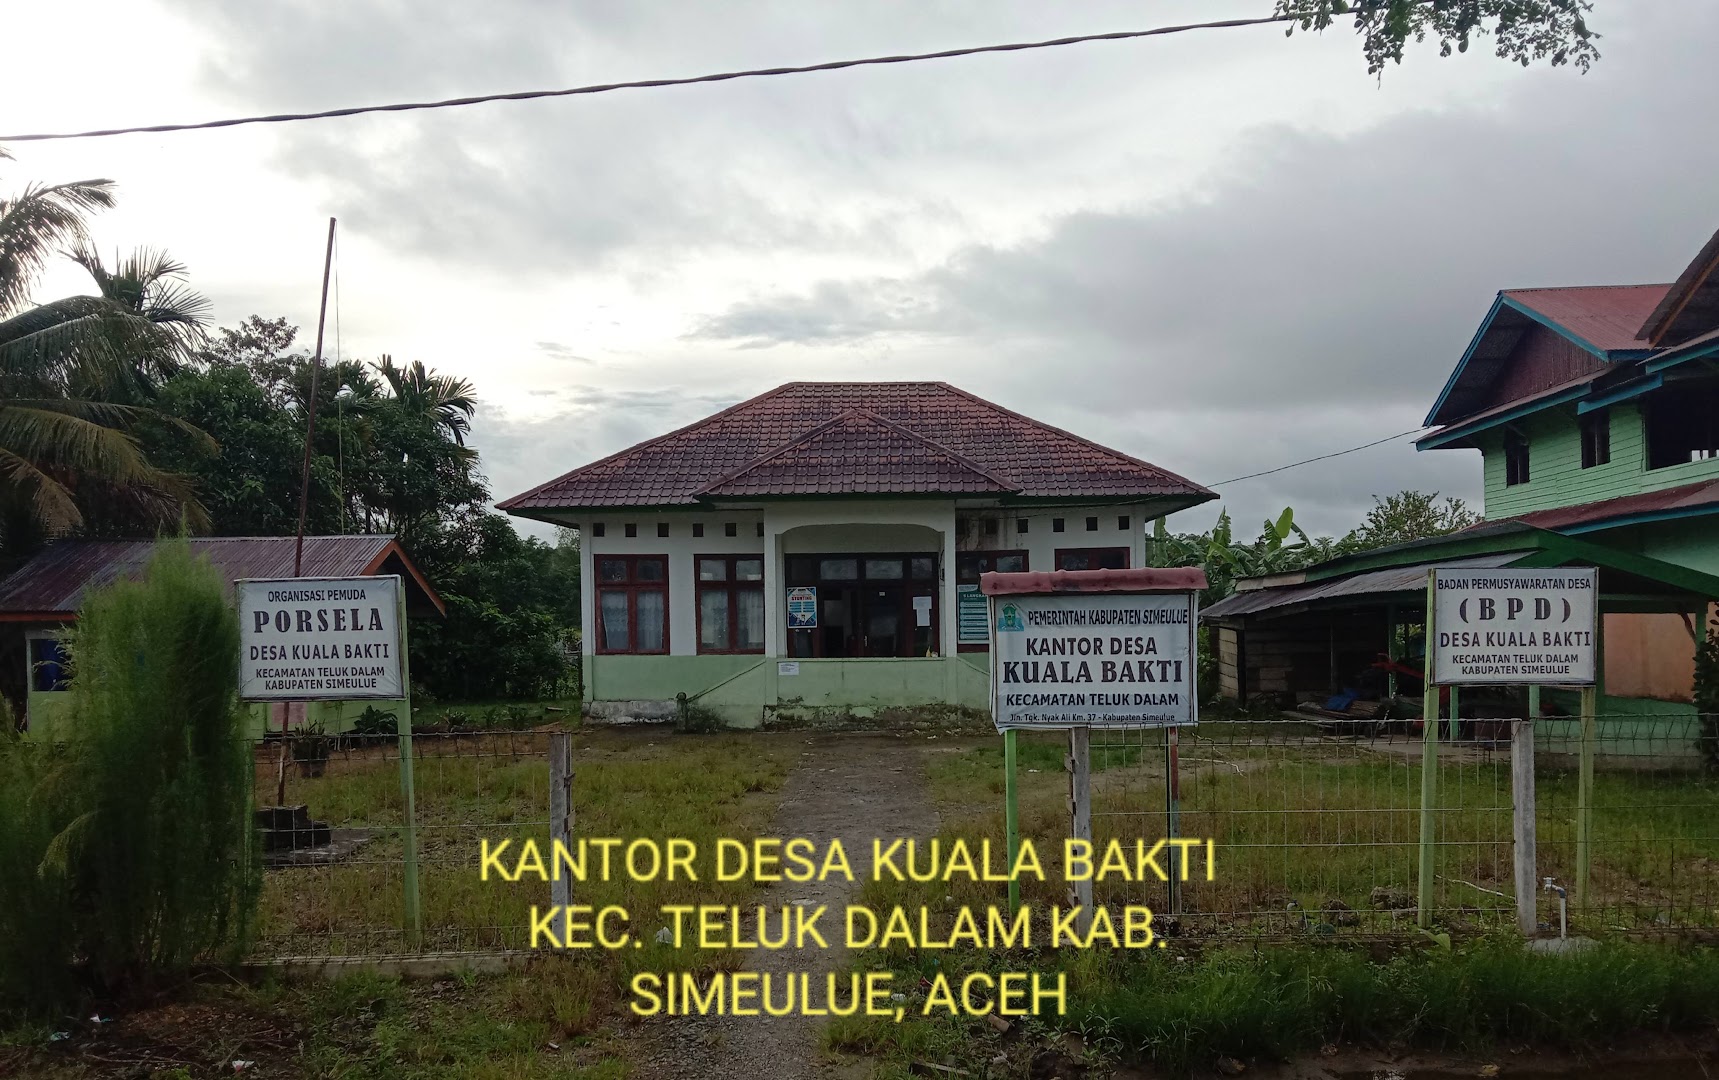 Gambar Kantor Desa Kuala Bakti Kec. Teluk Dalam Kab. Simeulue, Aceh